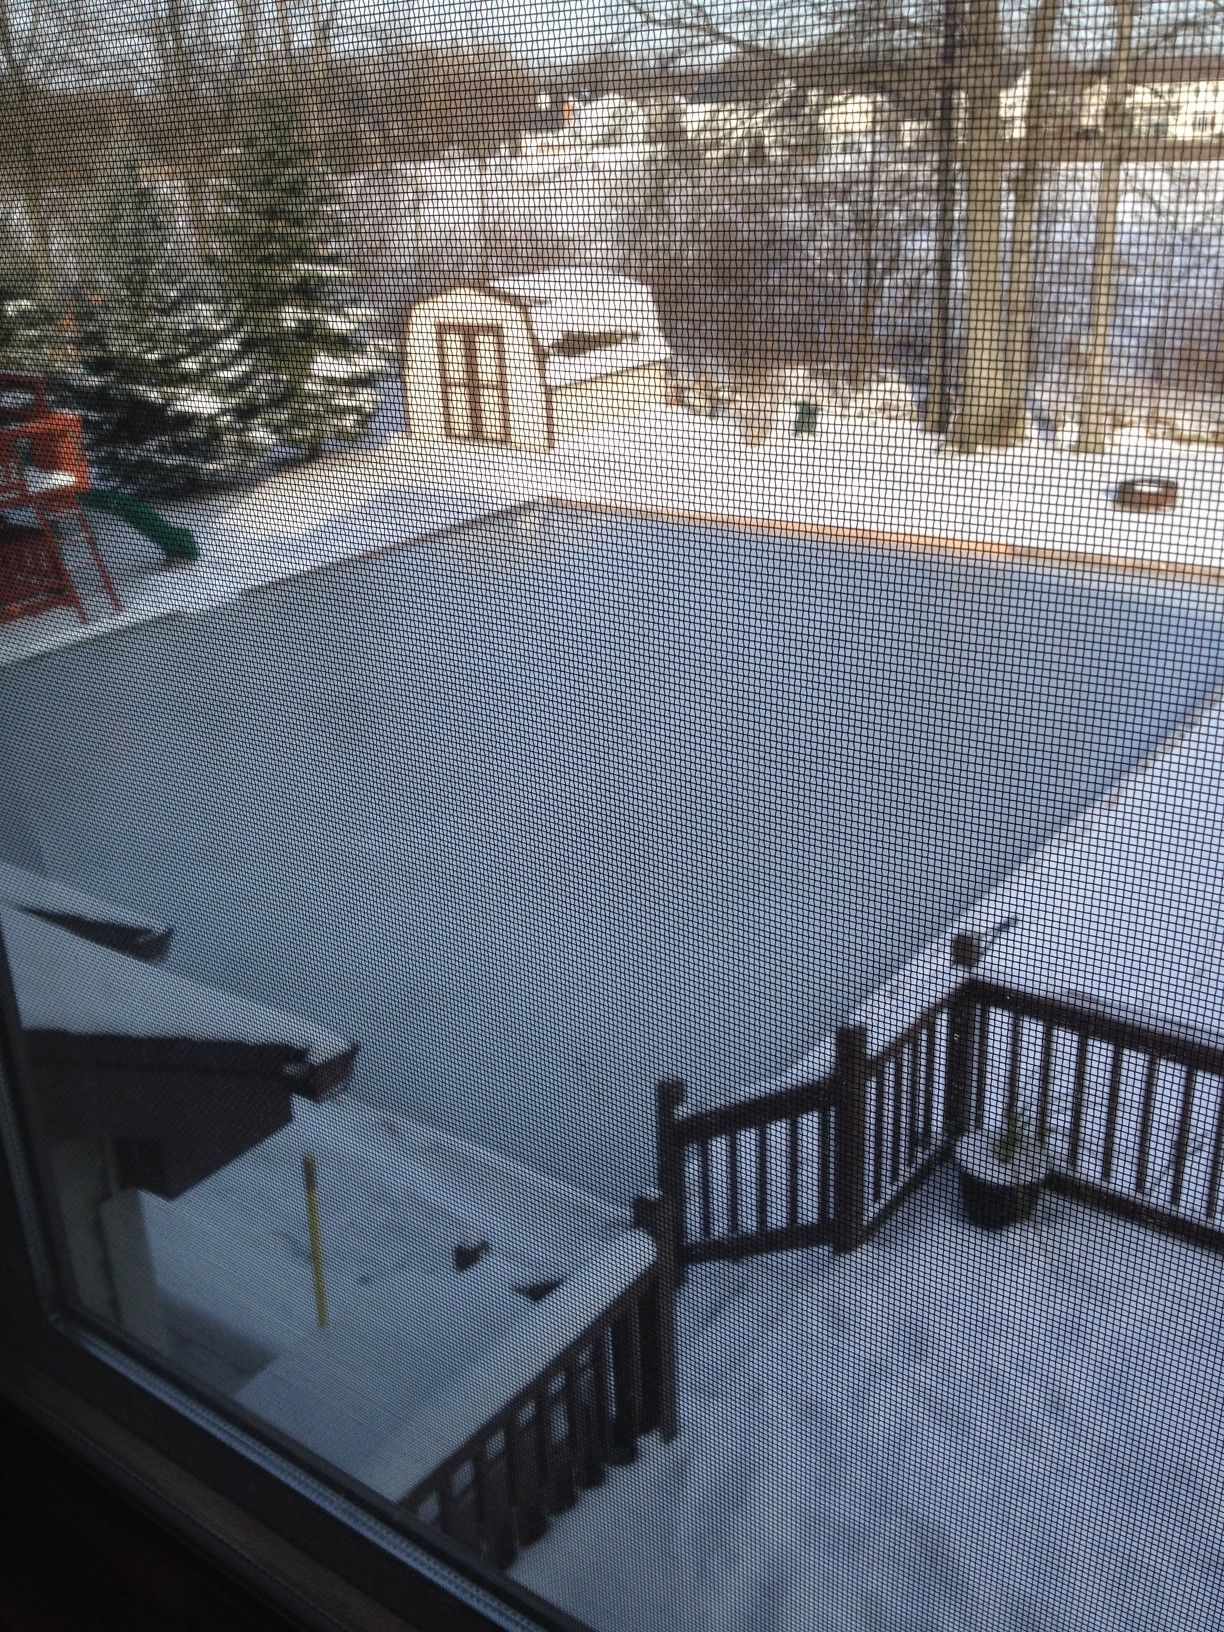 backyard ice rink fully frozen